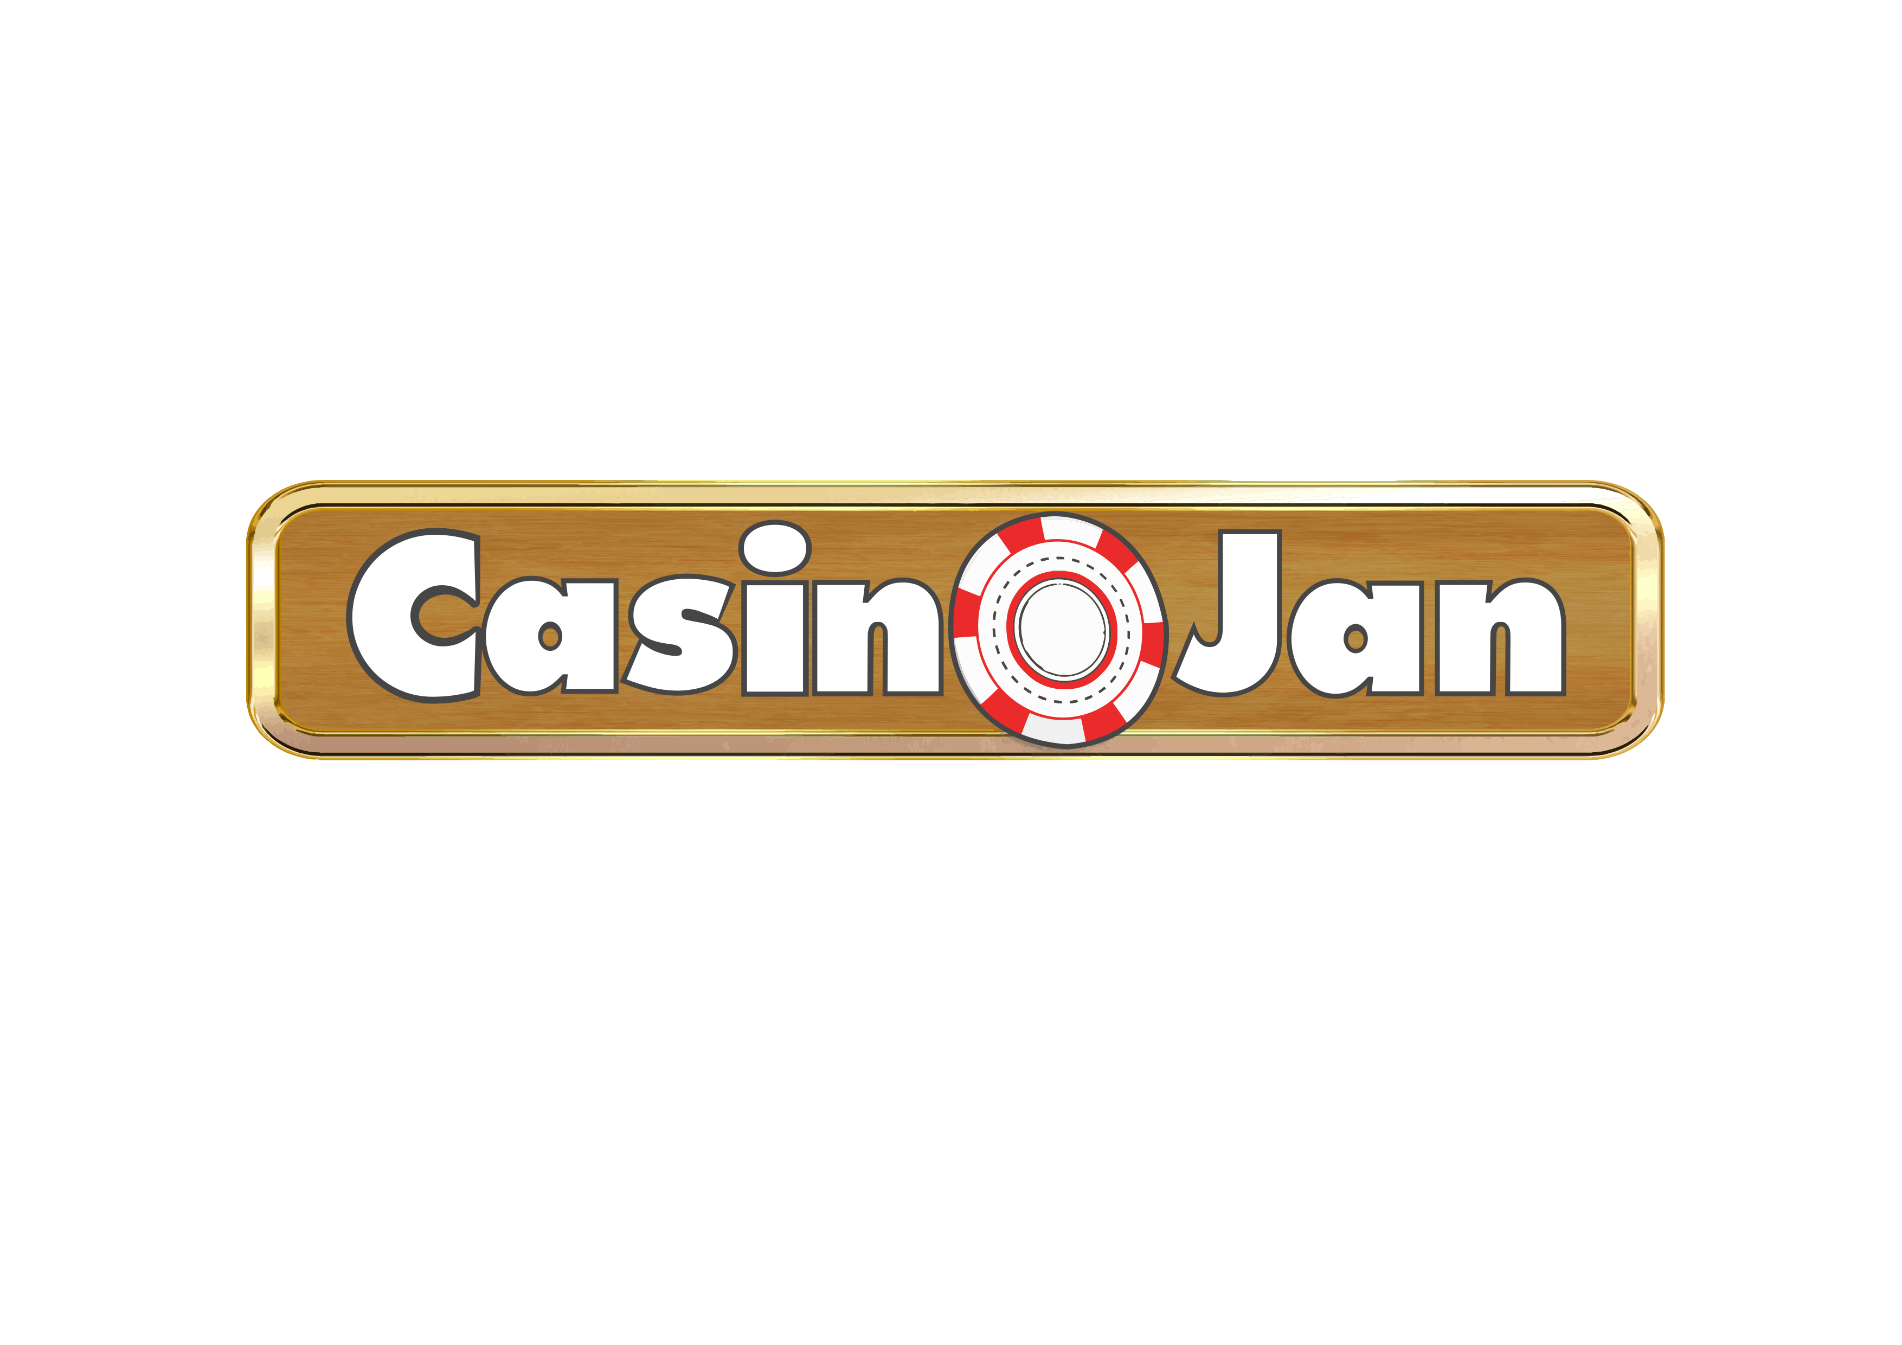 Casinojan logo original